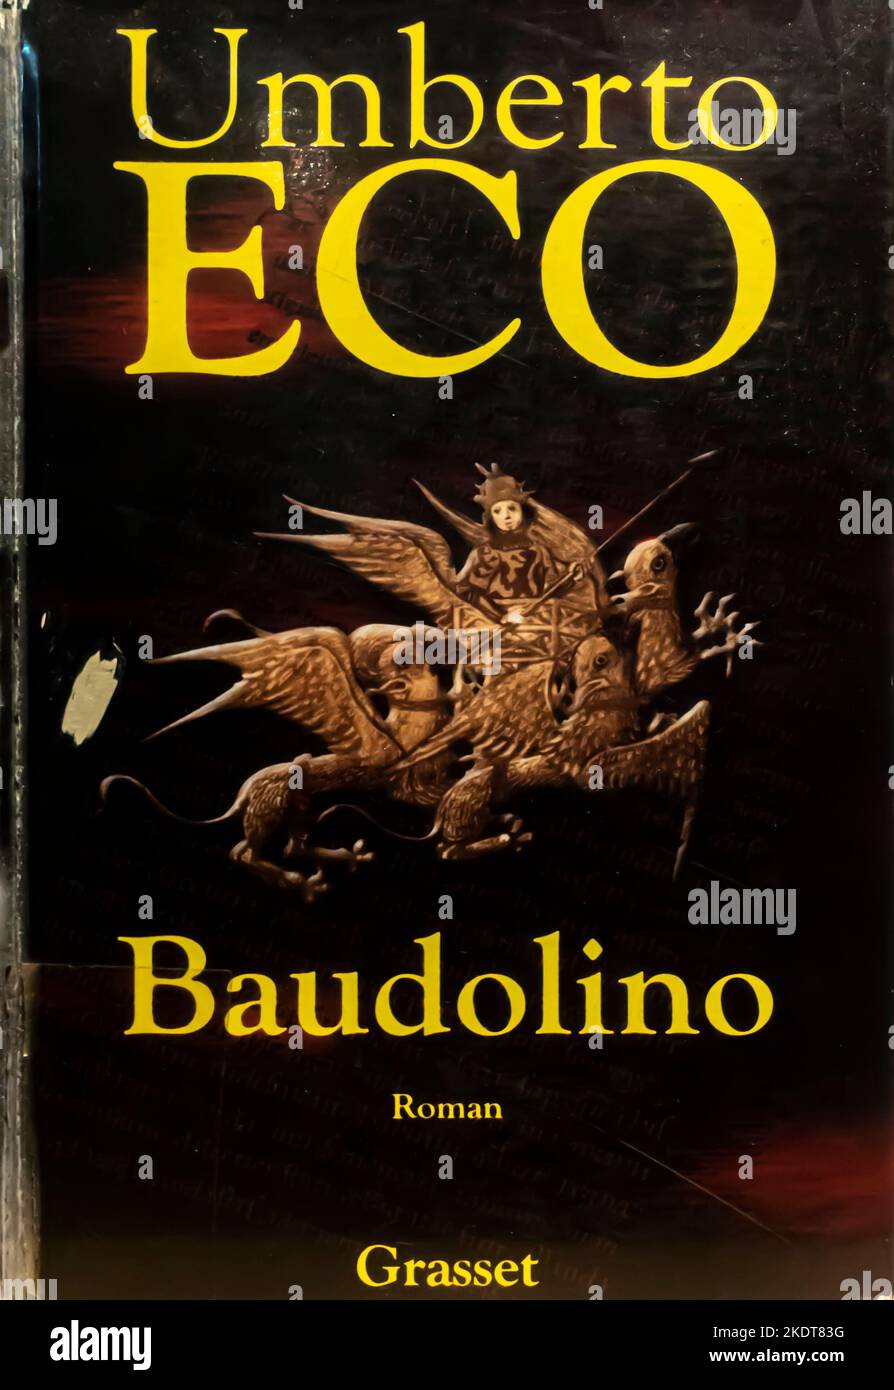 Roman de Baudolino par Umberto Eco 2000 Banque D'Images